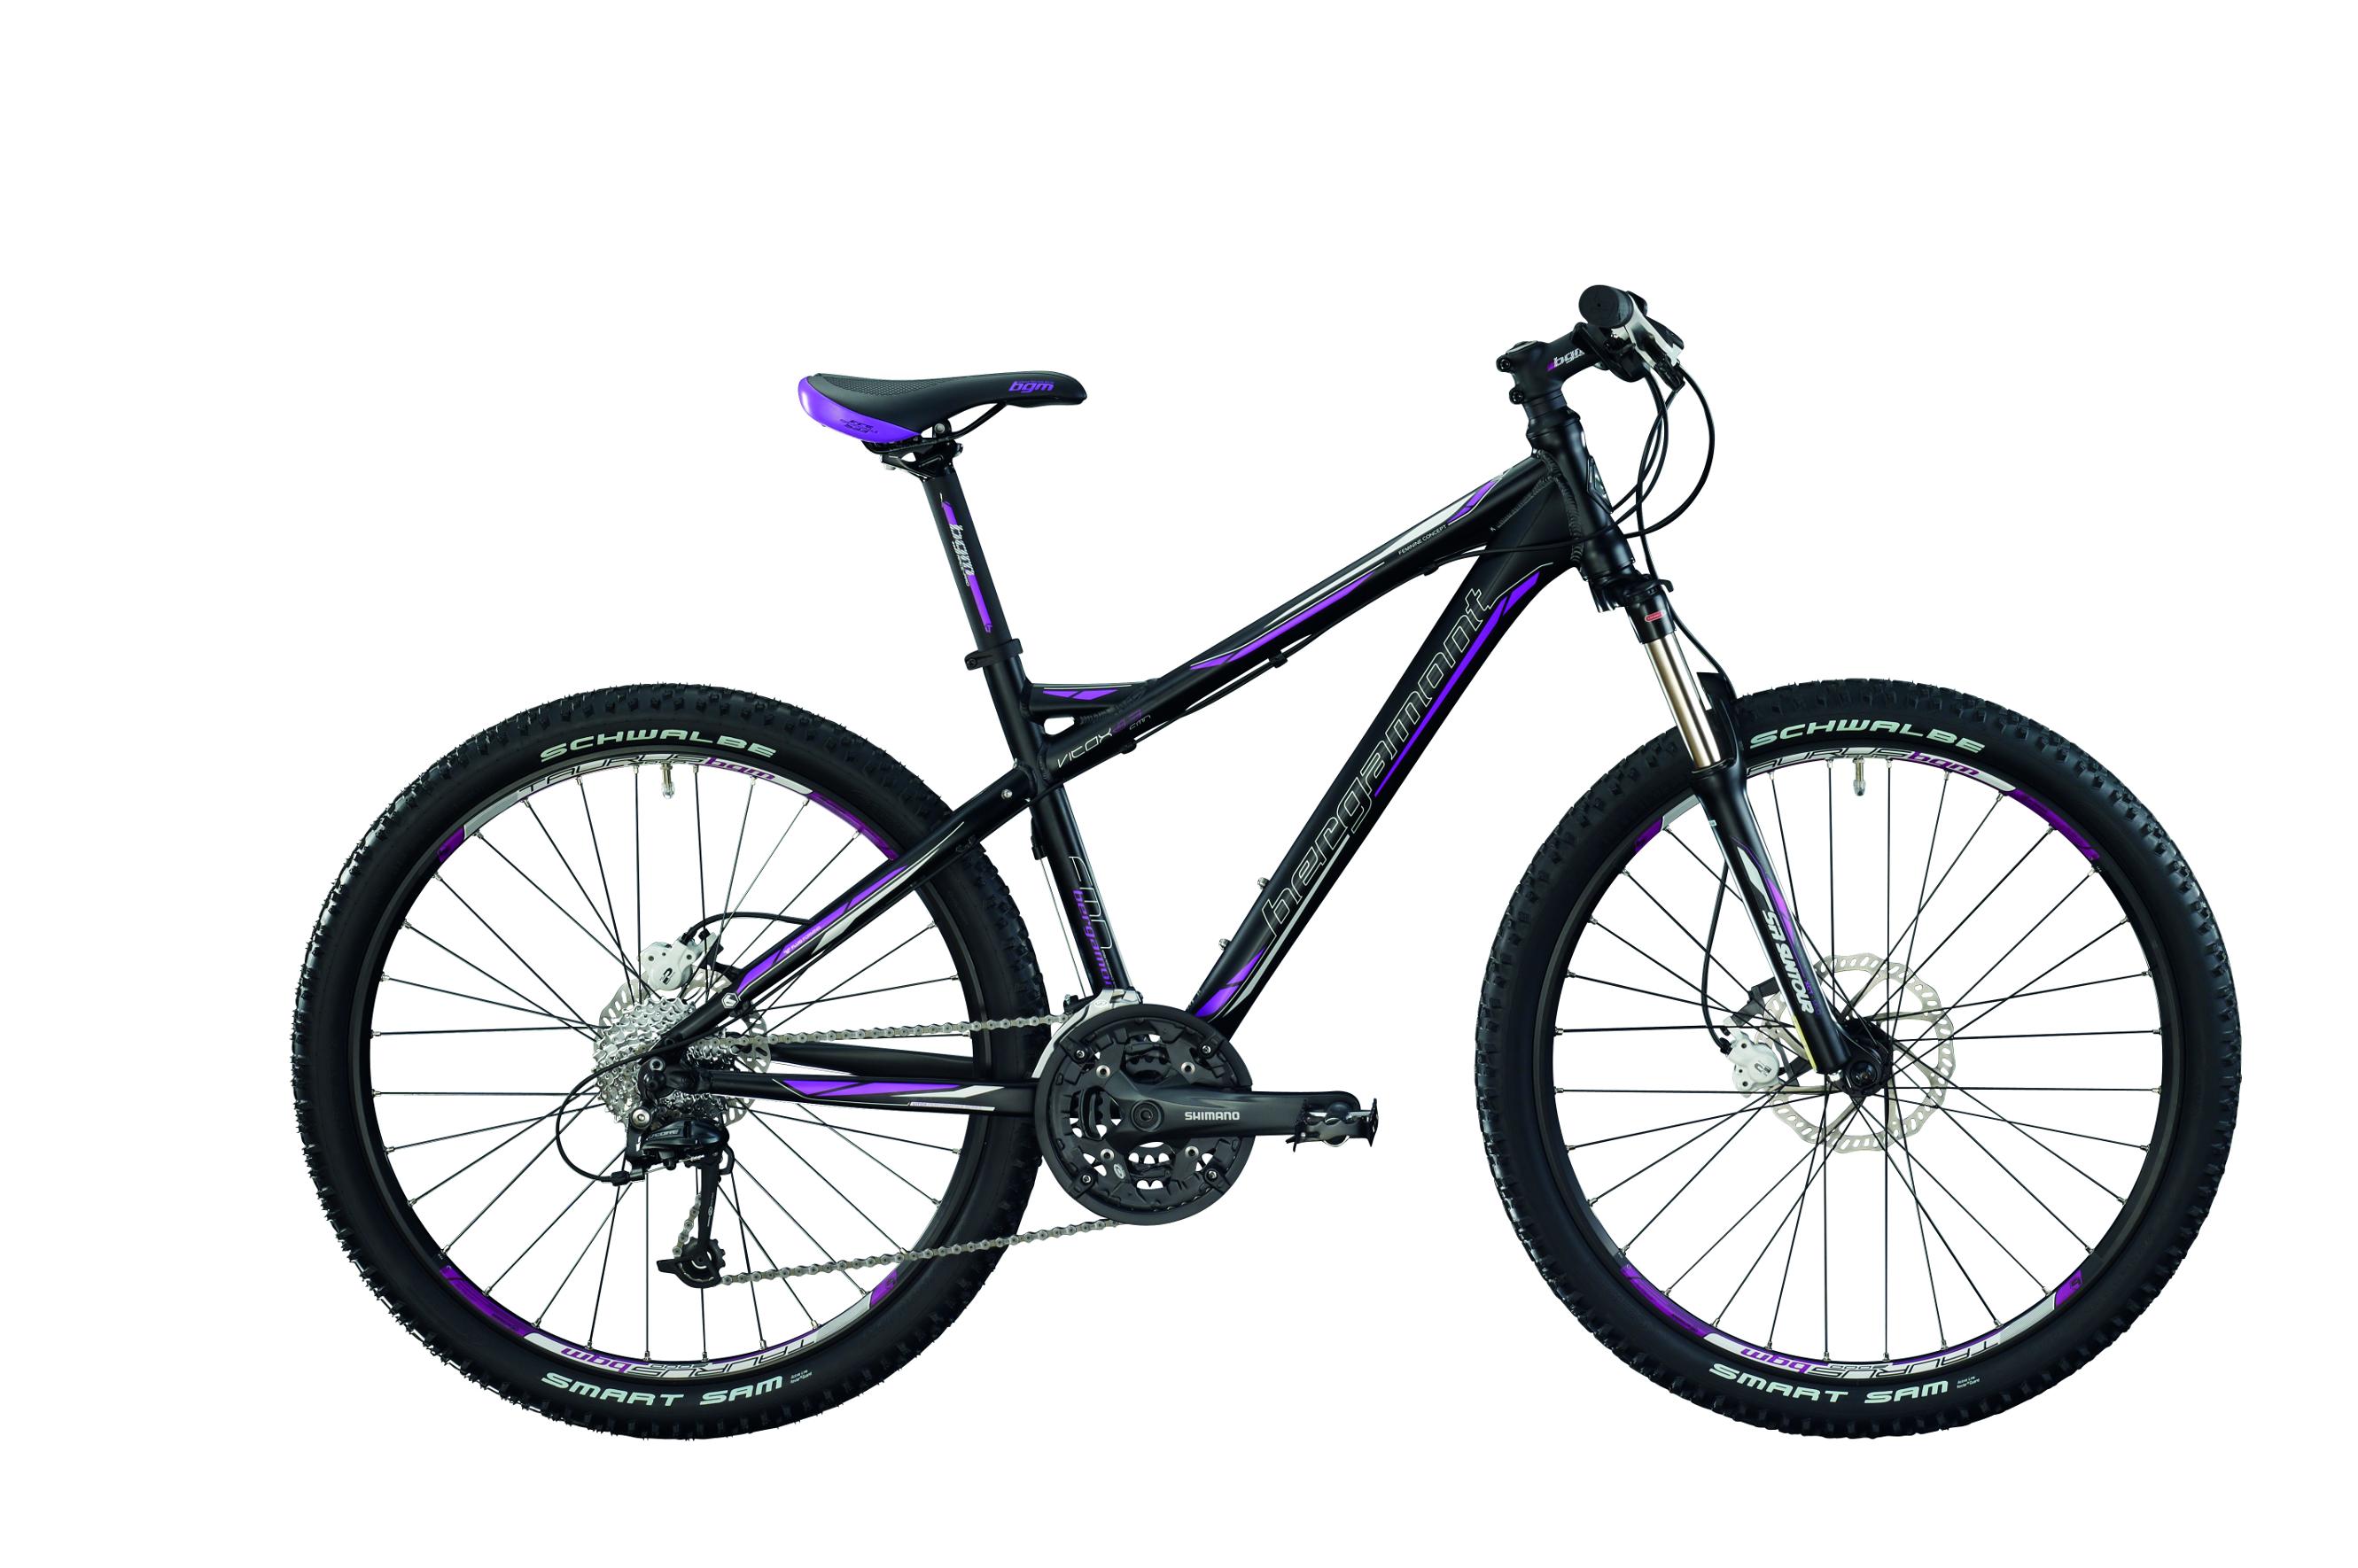 Foto Bicicleta de montaña Bergamont Vitox 8.3 violeta/negro para muje, ... foto 431465